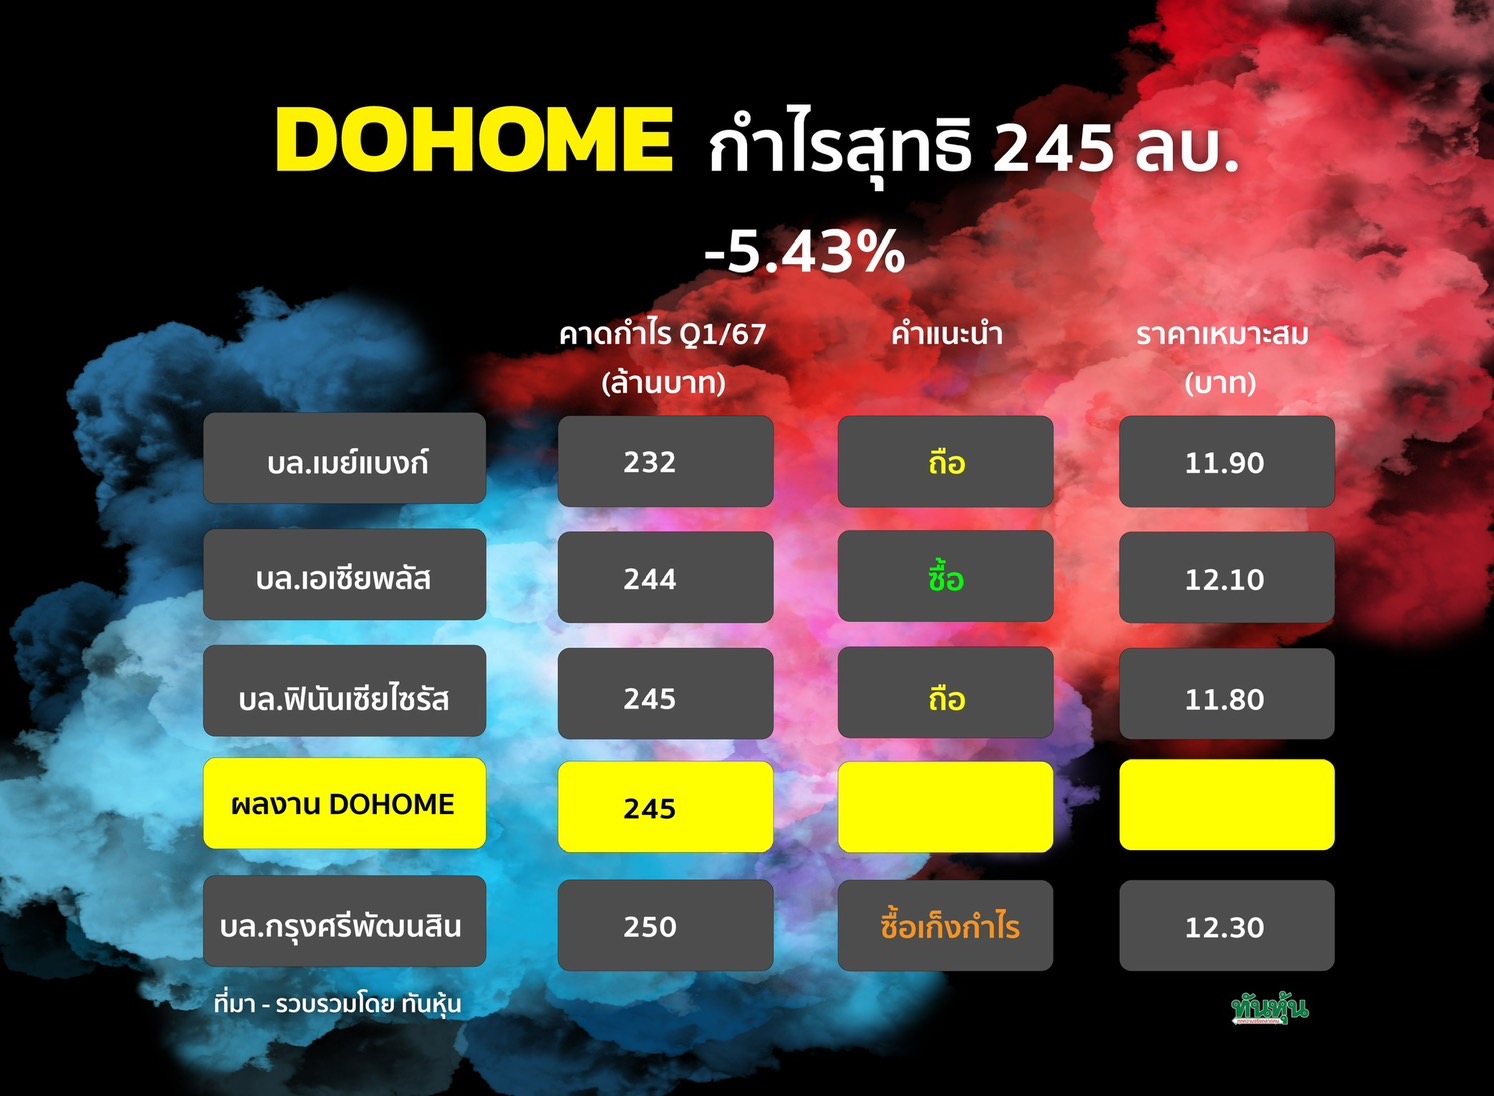 DOHOME กำไรสุทธิ 245 ลบ. -5.43%